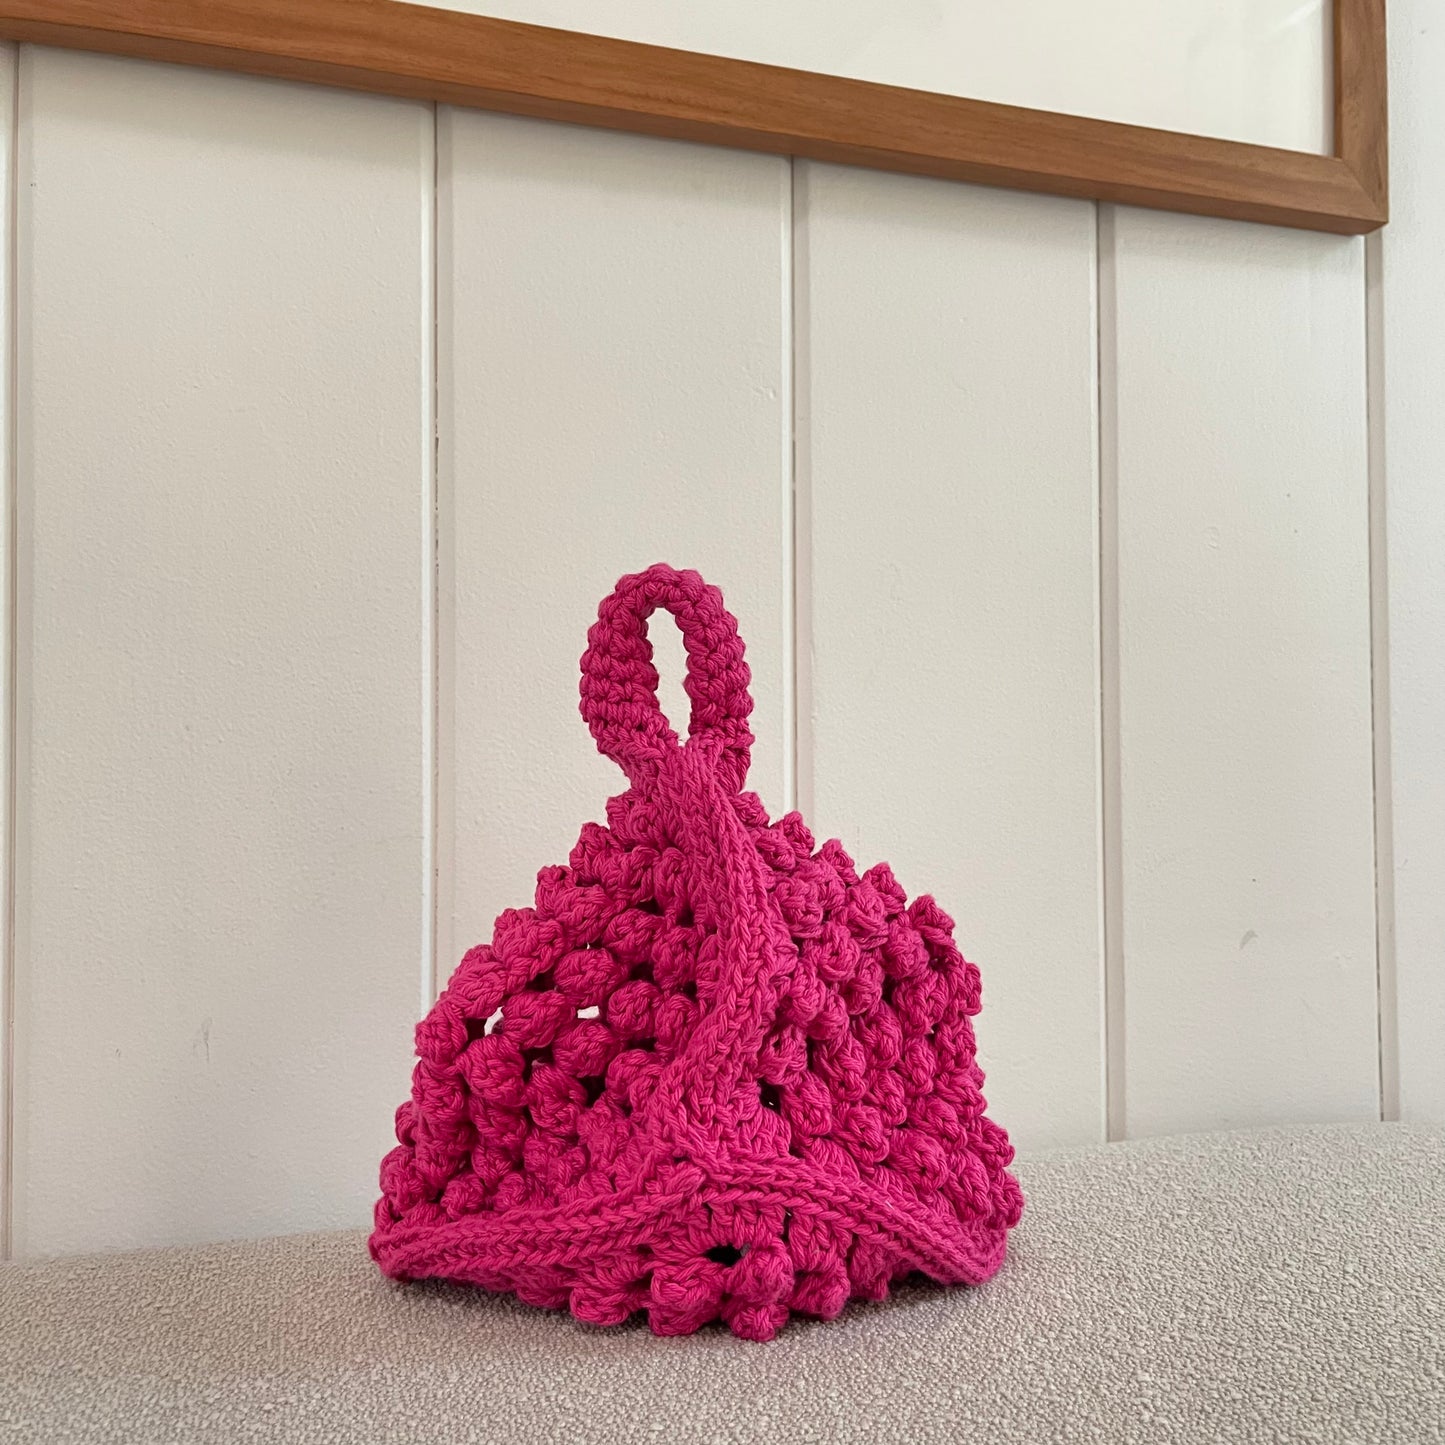 A pink crocheted granny square handbag. 